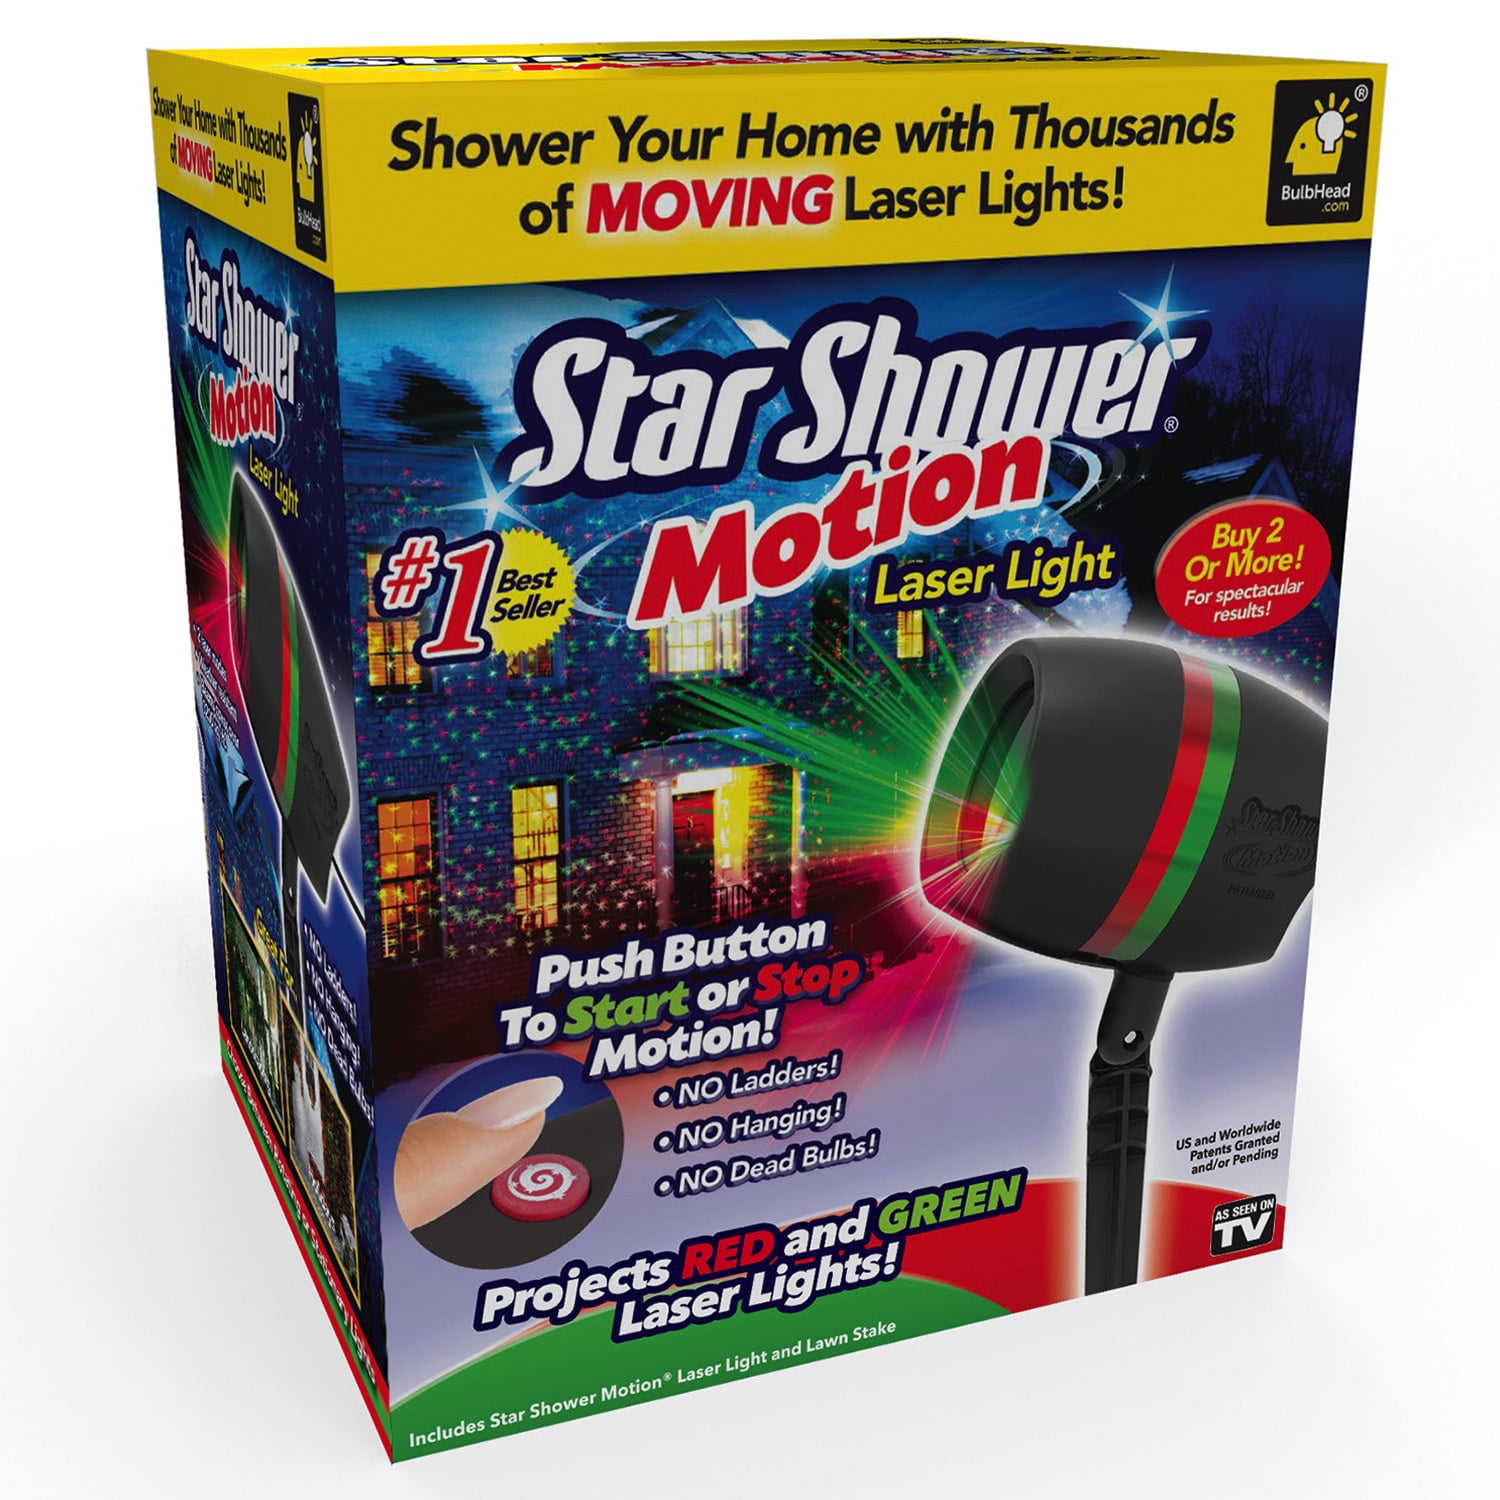 10639-6 BulbHead Star Shower Motion Laser Lights Projector for sale online 